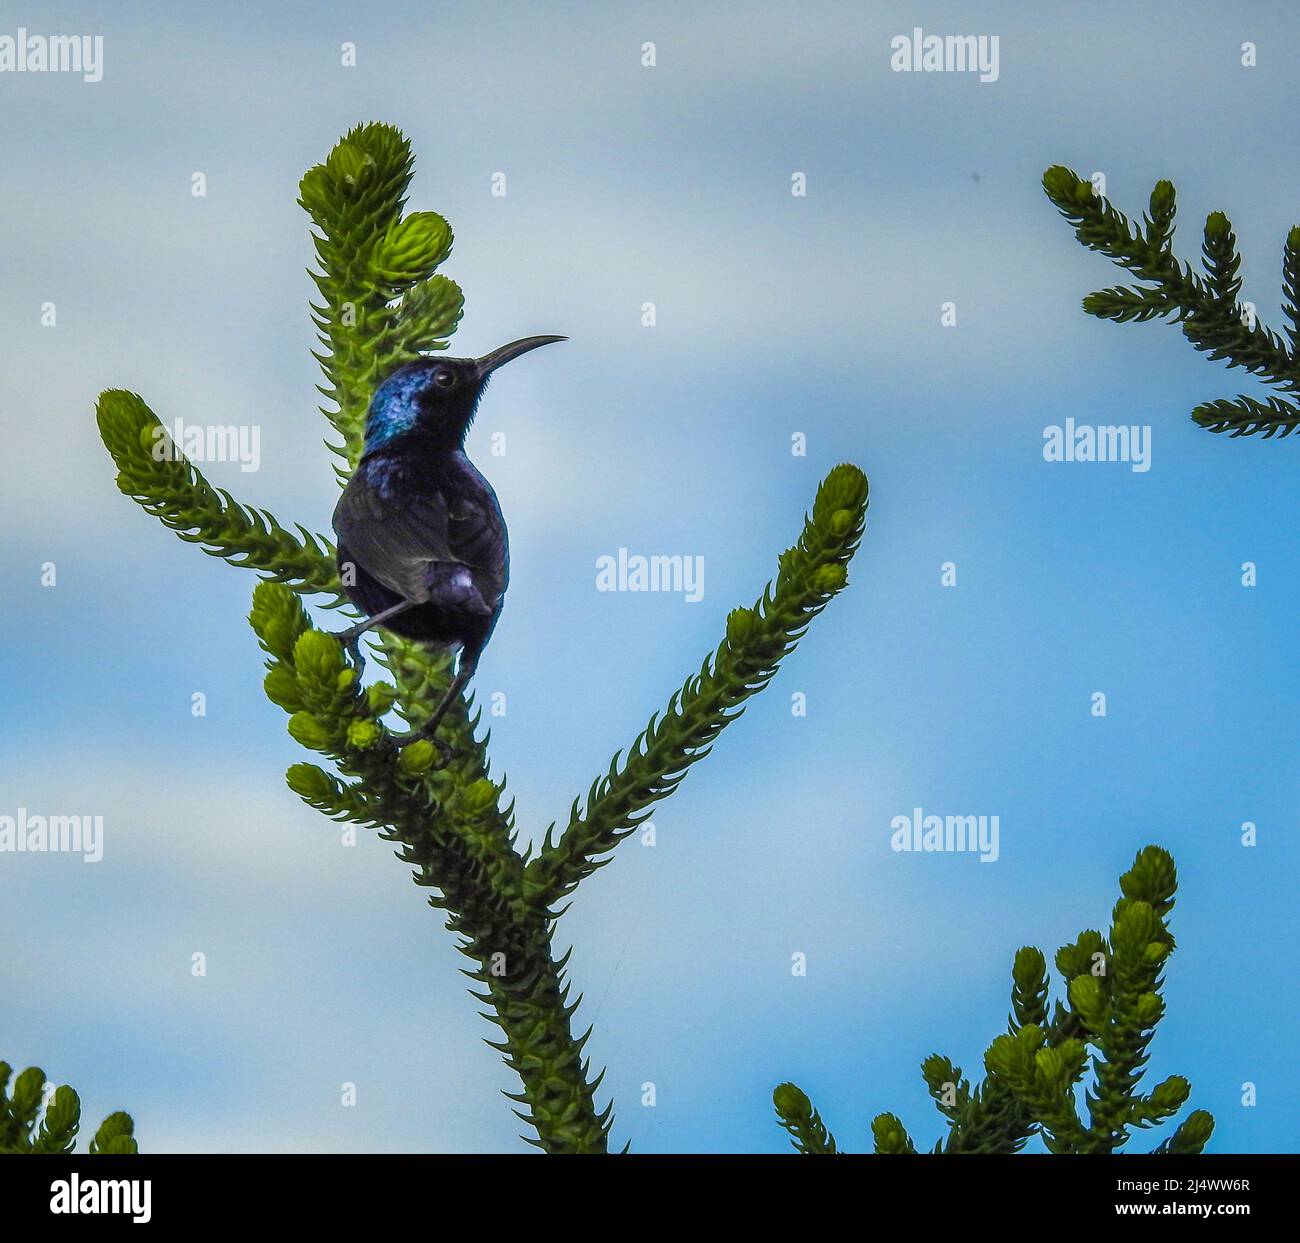 The Palestine sunbird (Cinnyris osea) sitting on a green tree branch. It is a small passerine bird of the sunbird family, Nectariniidae, also known as Stock Photo